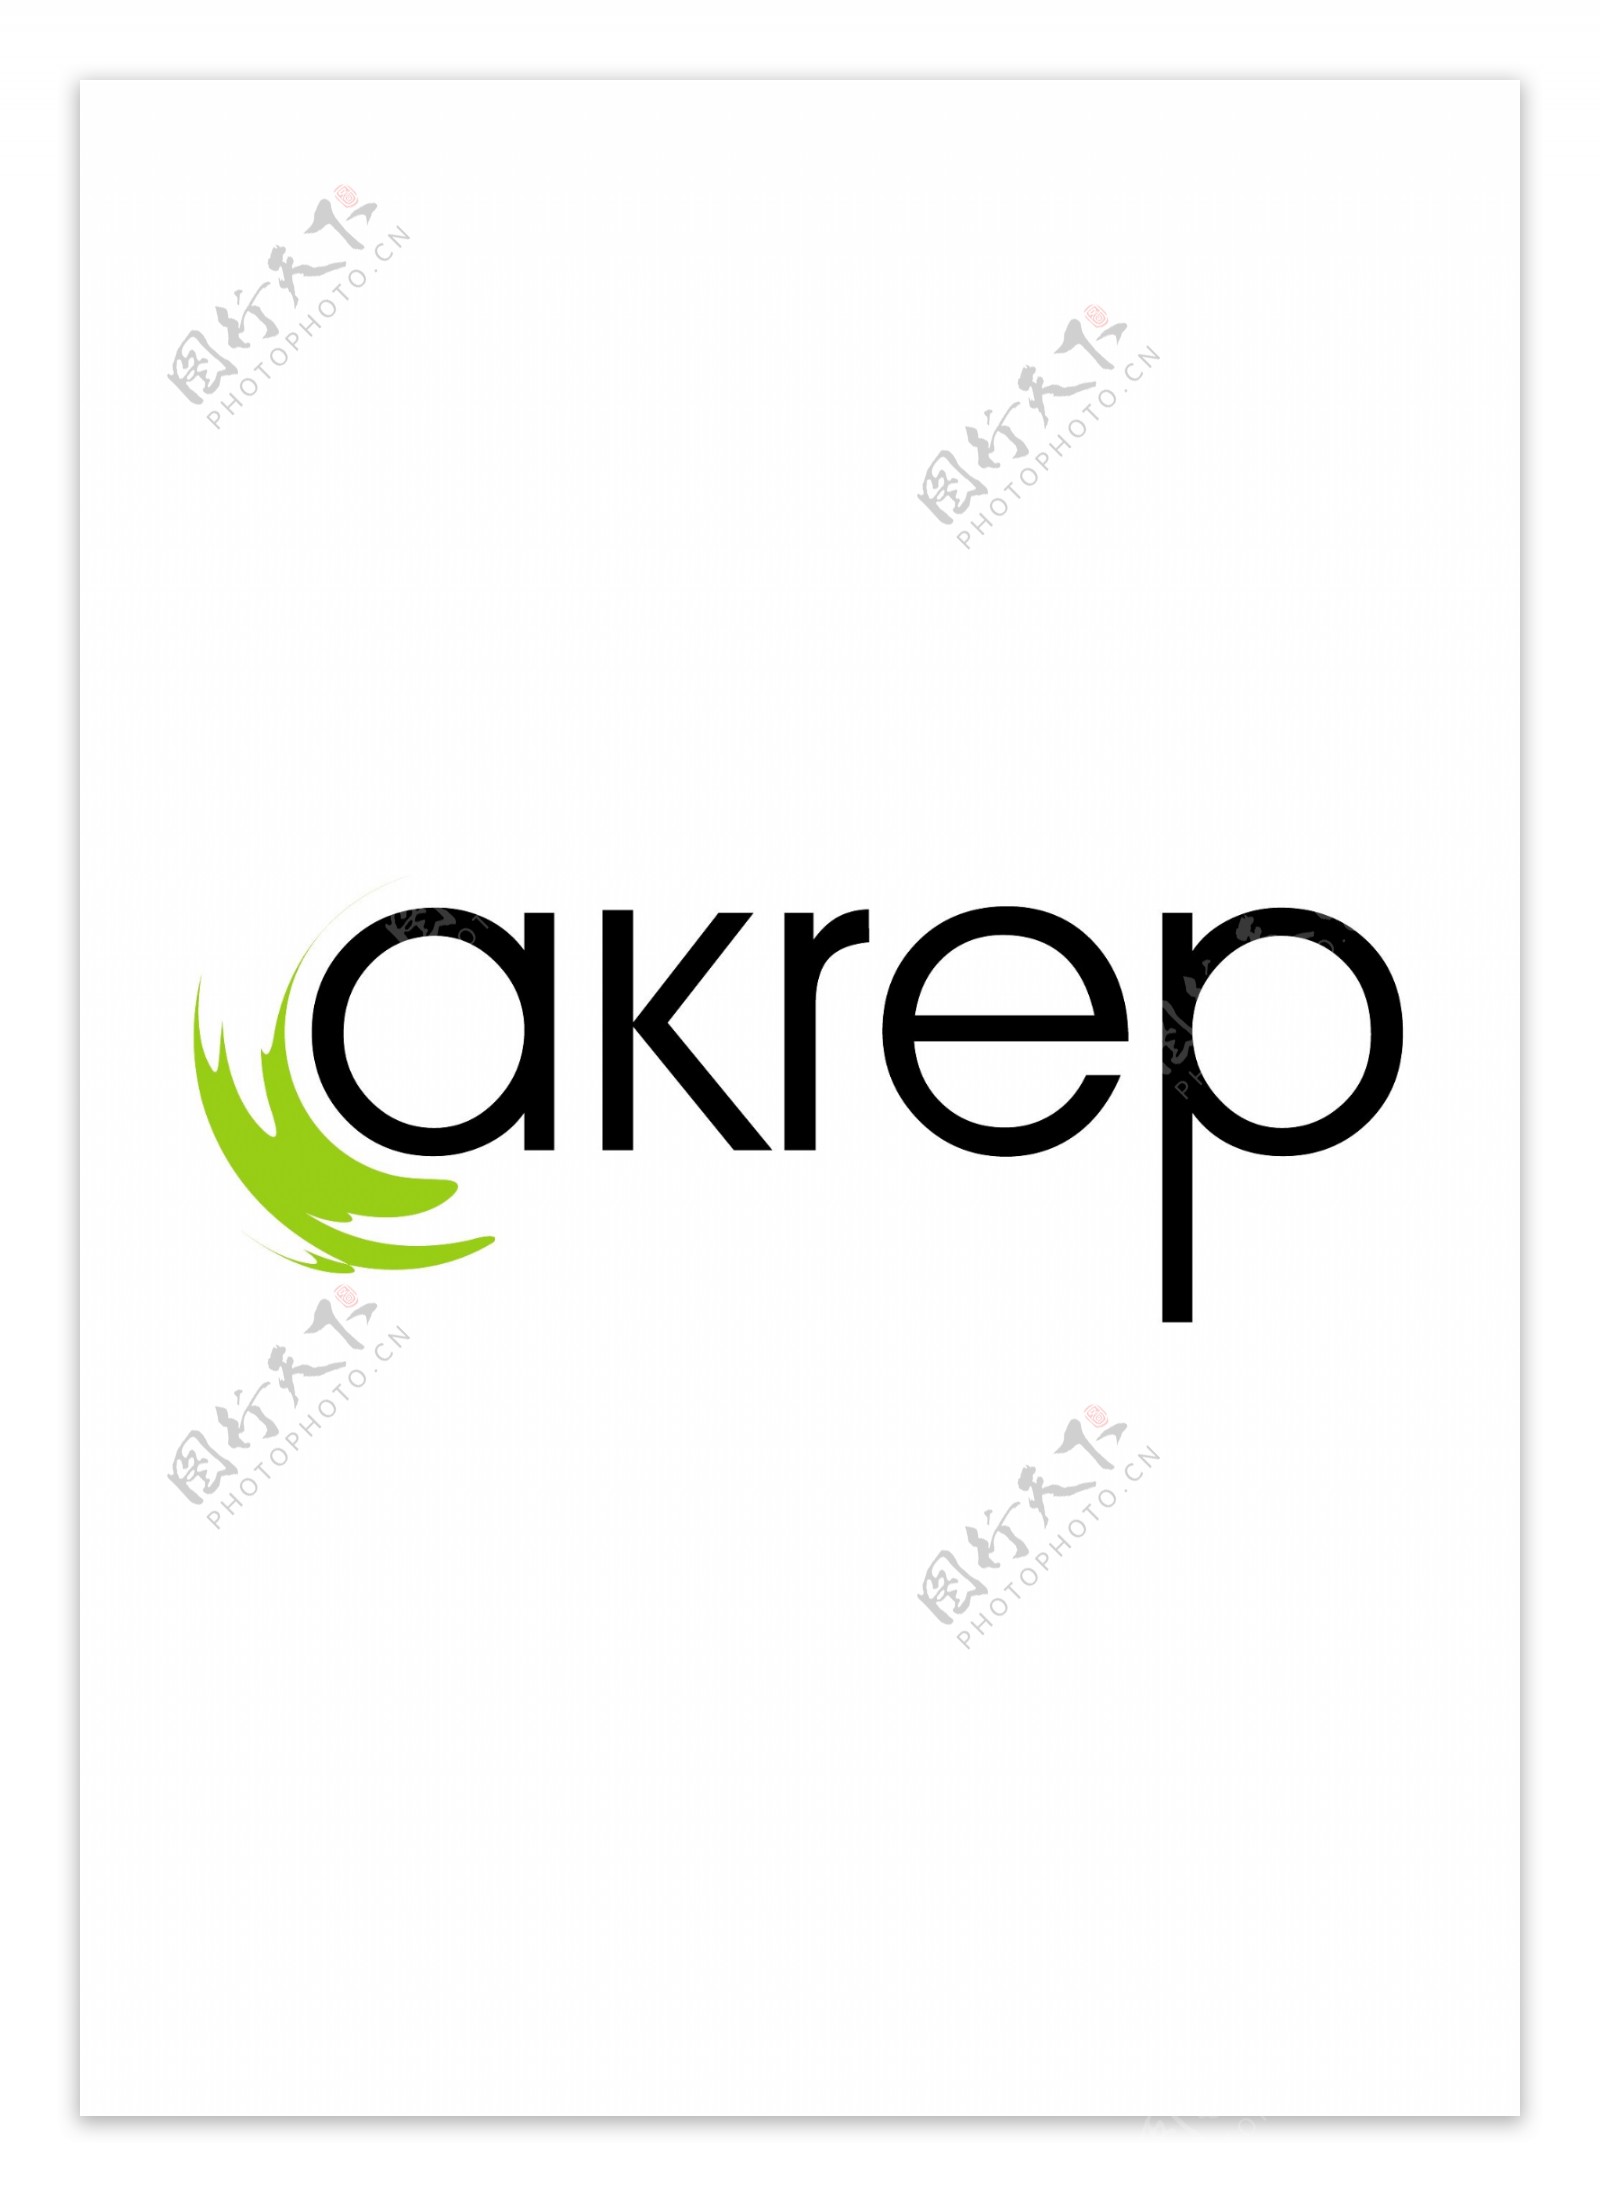 AKREPlogo设计欣赏AKREP工业标志下载标志设计欣赏